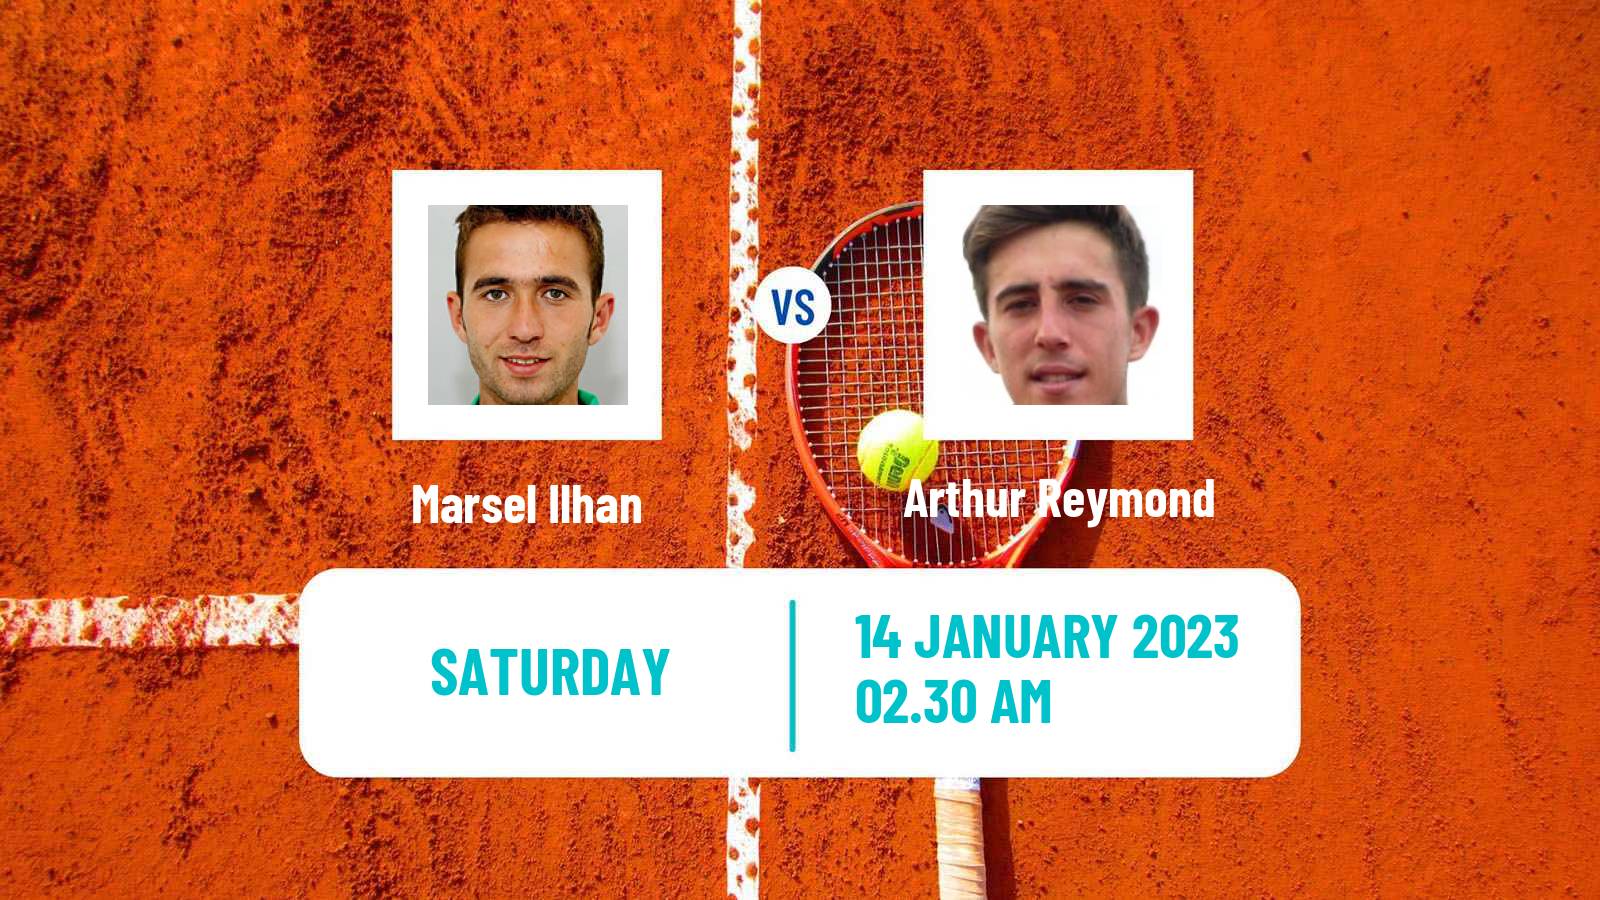 Tennis ITF Tournaments Marsel Ilhan - Arthur Reymond